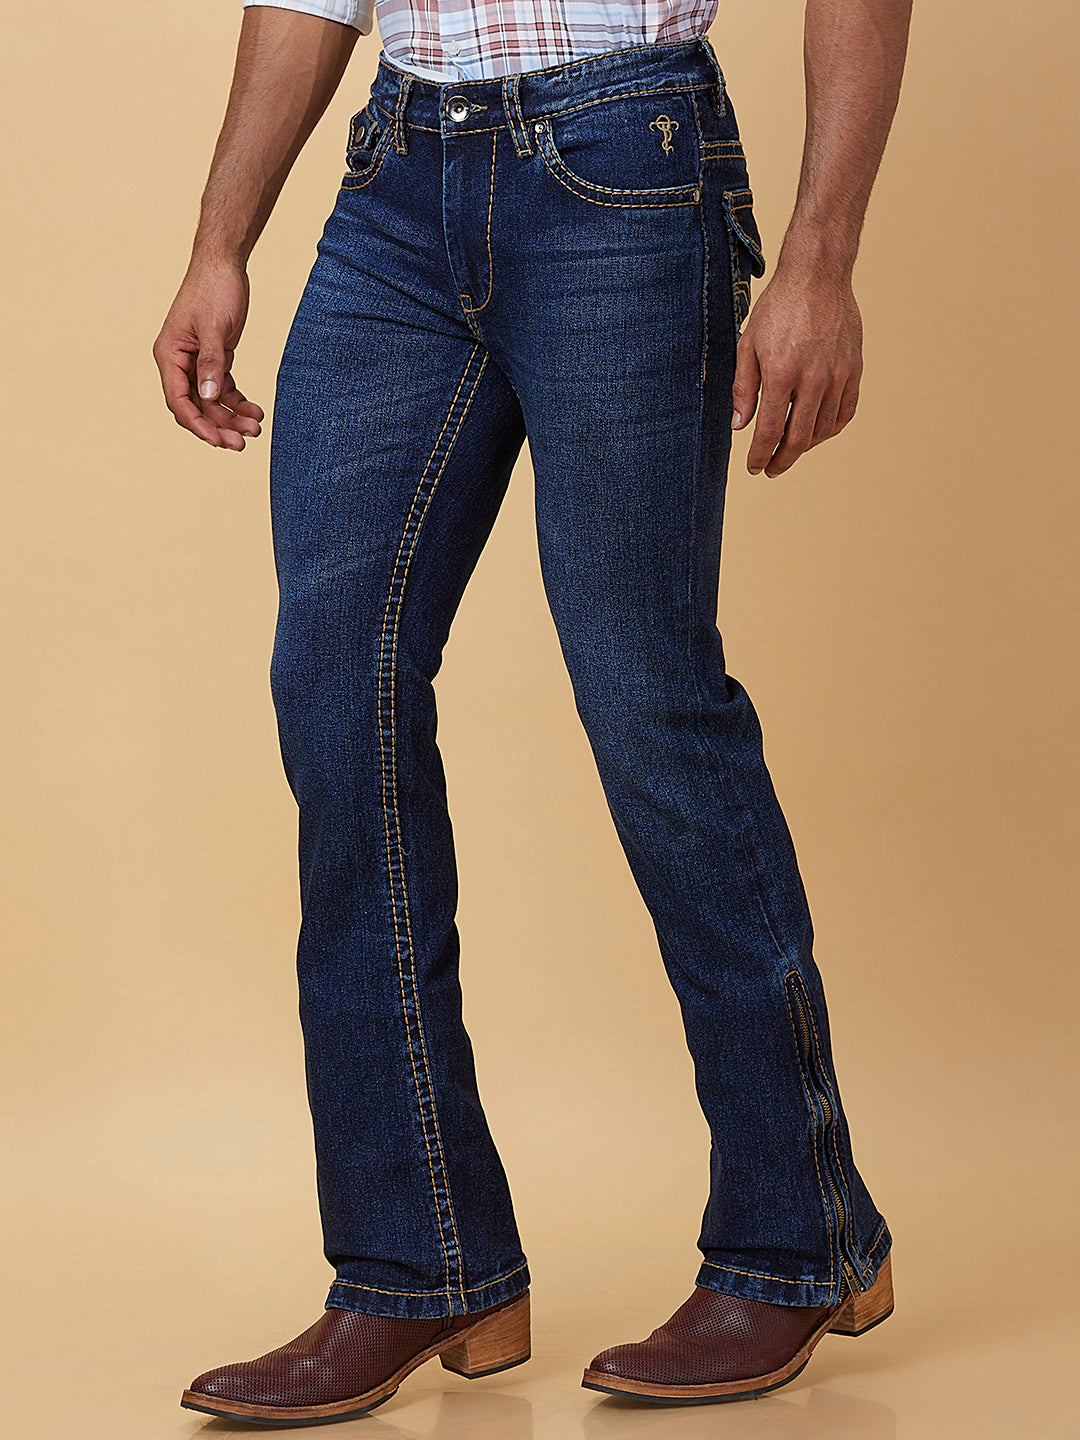 Indigo Blue Boot-cut Jeans with Saddle Stitch